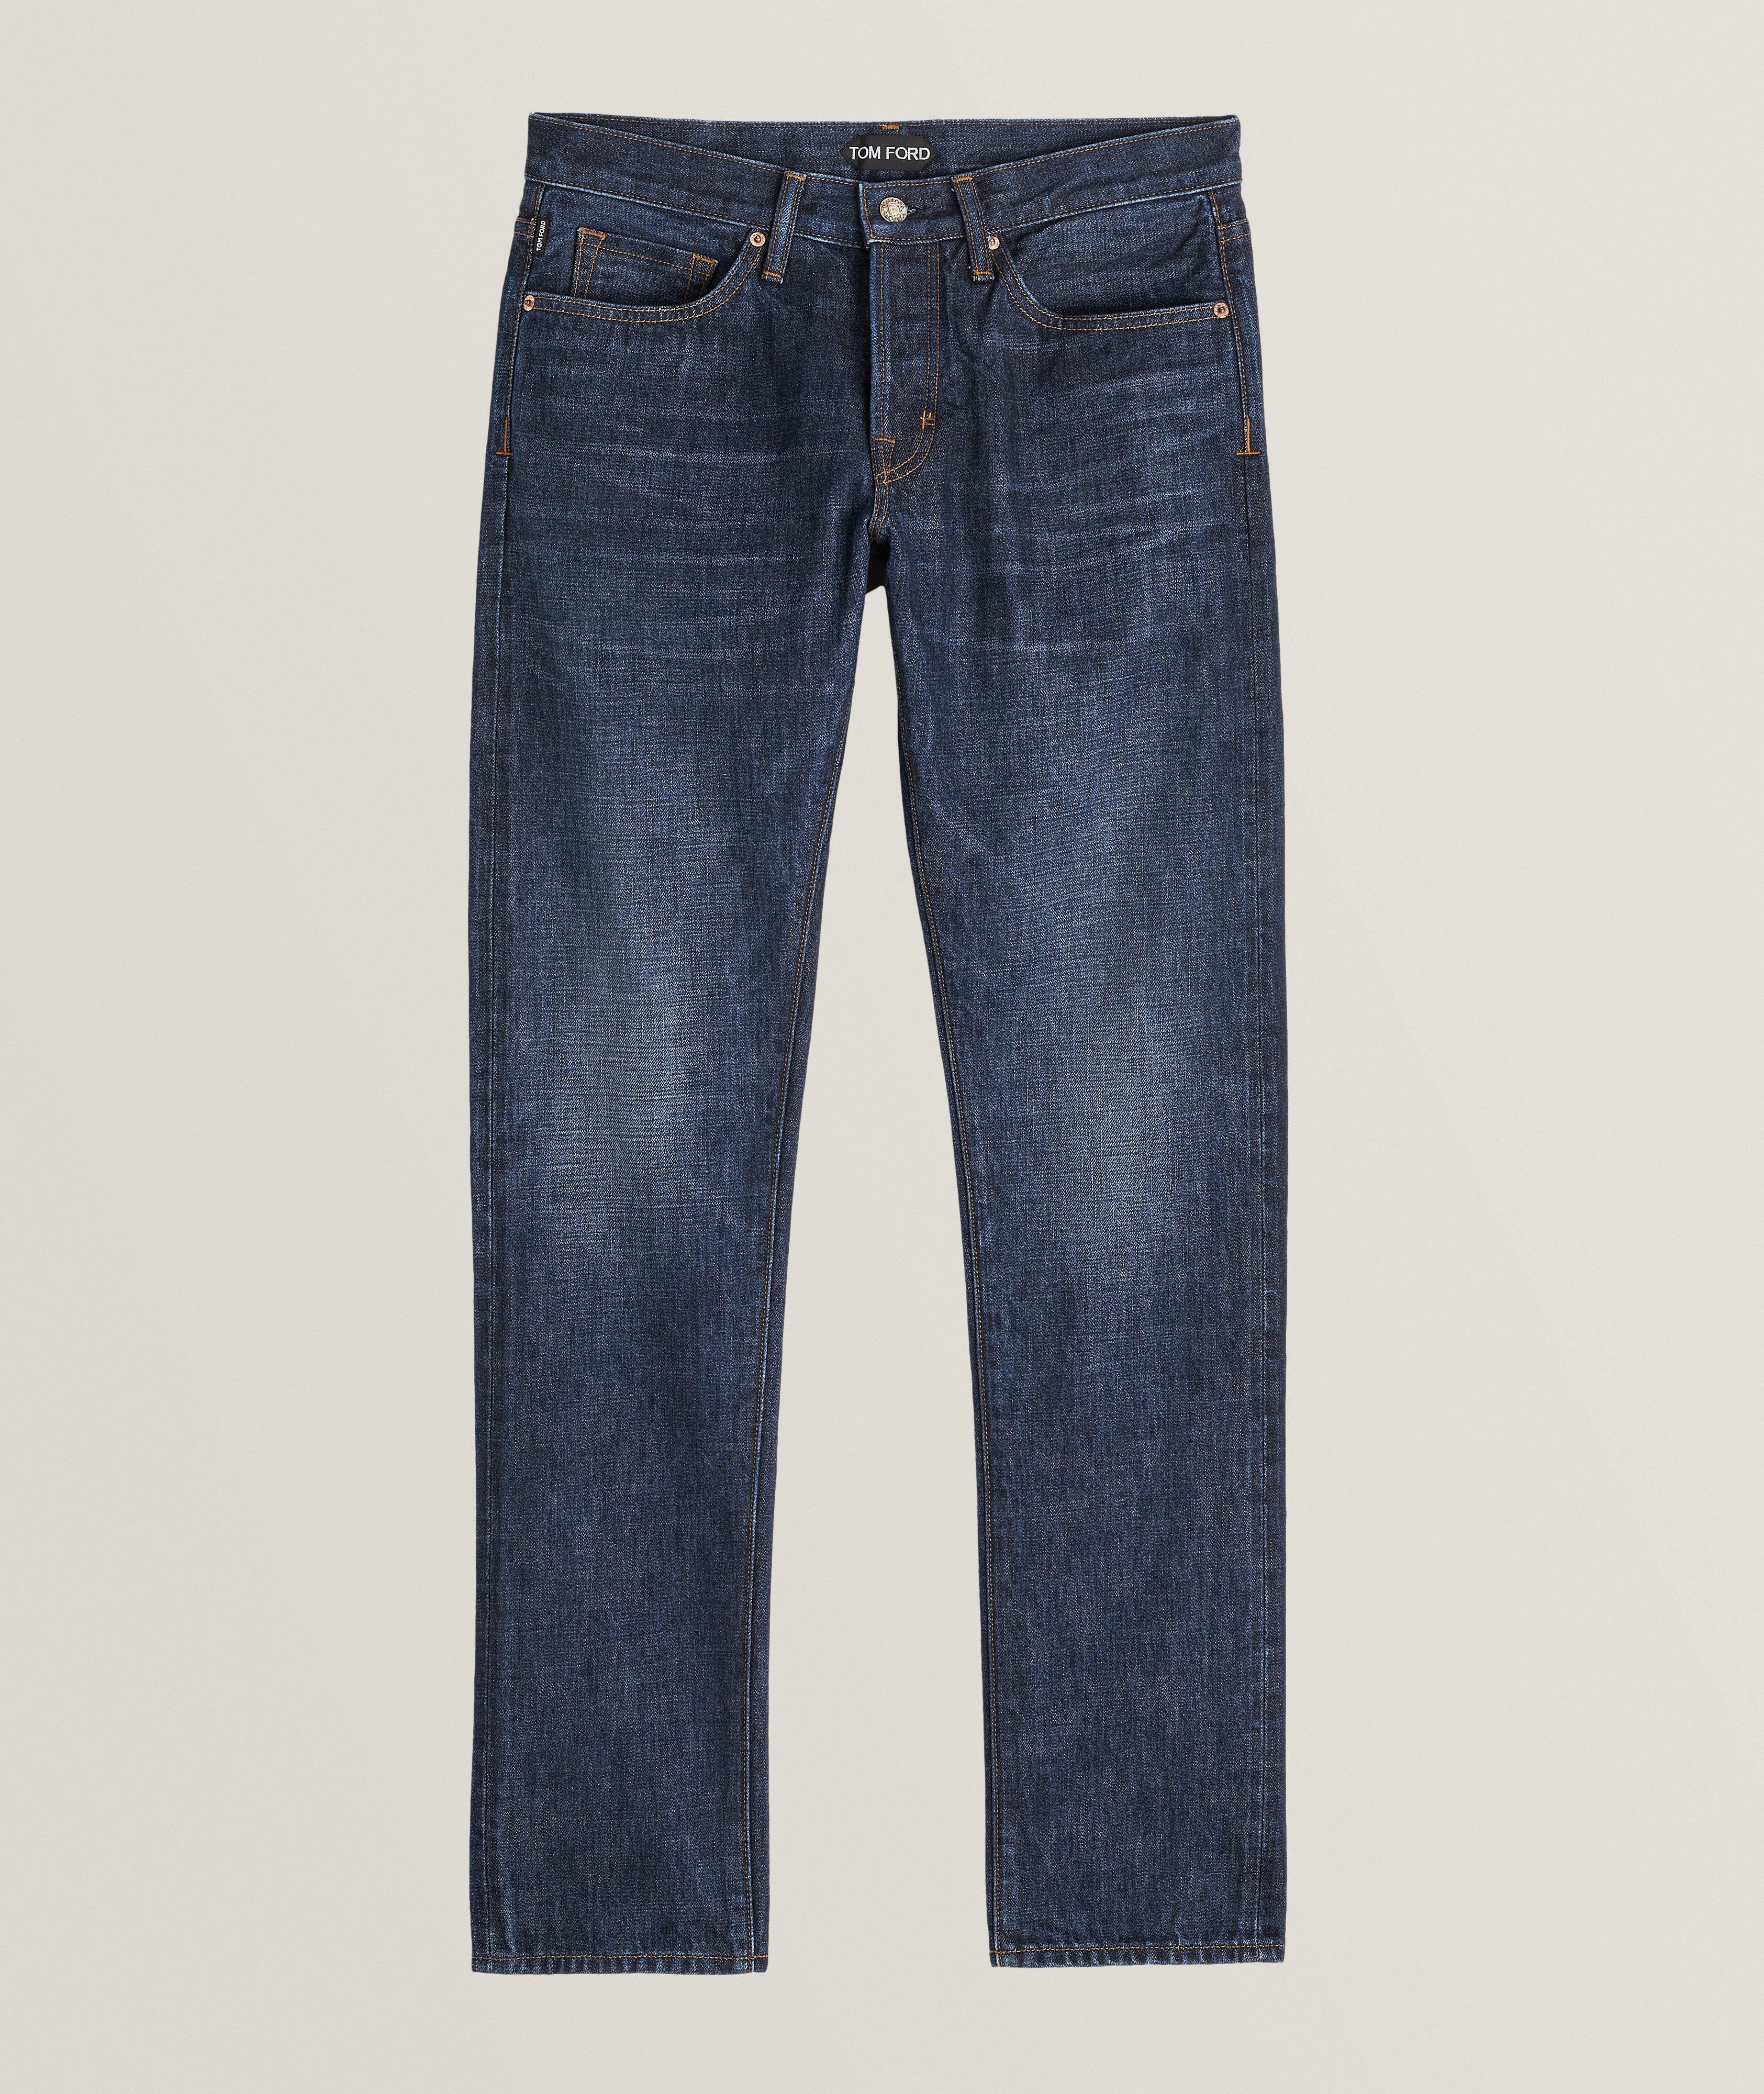 Slim-Fit Japanese Selvedge Cotton Jeans image 0